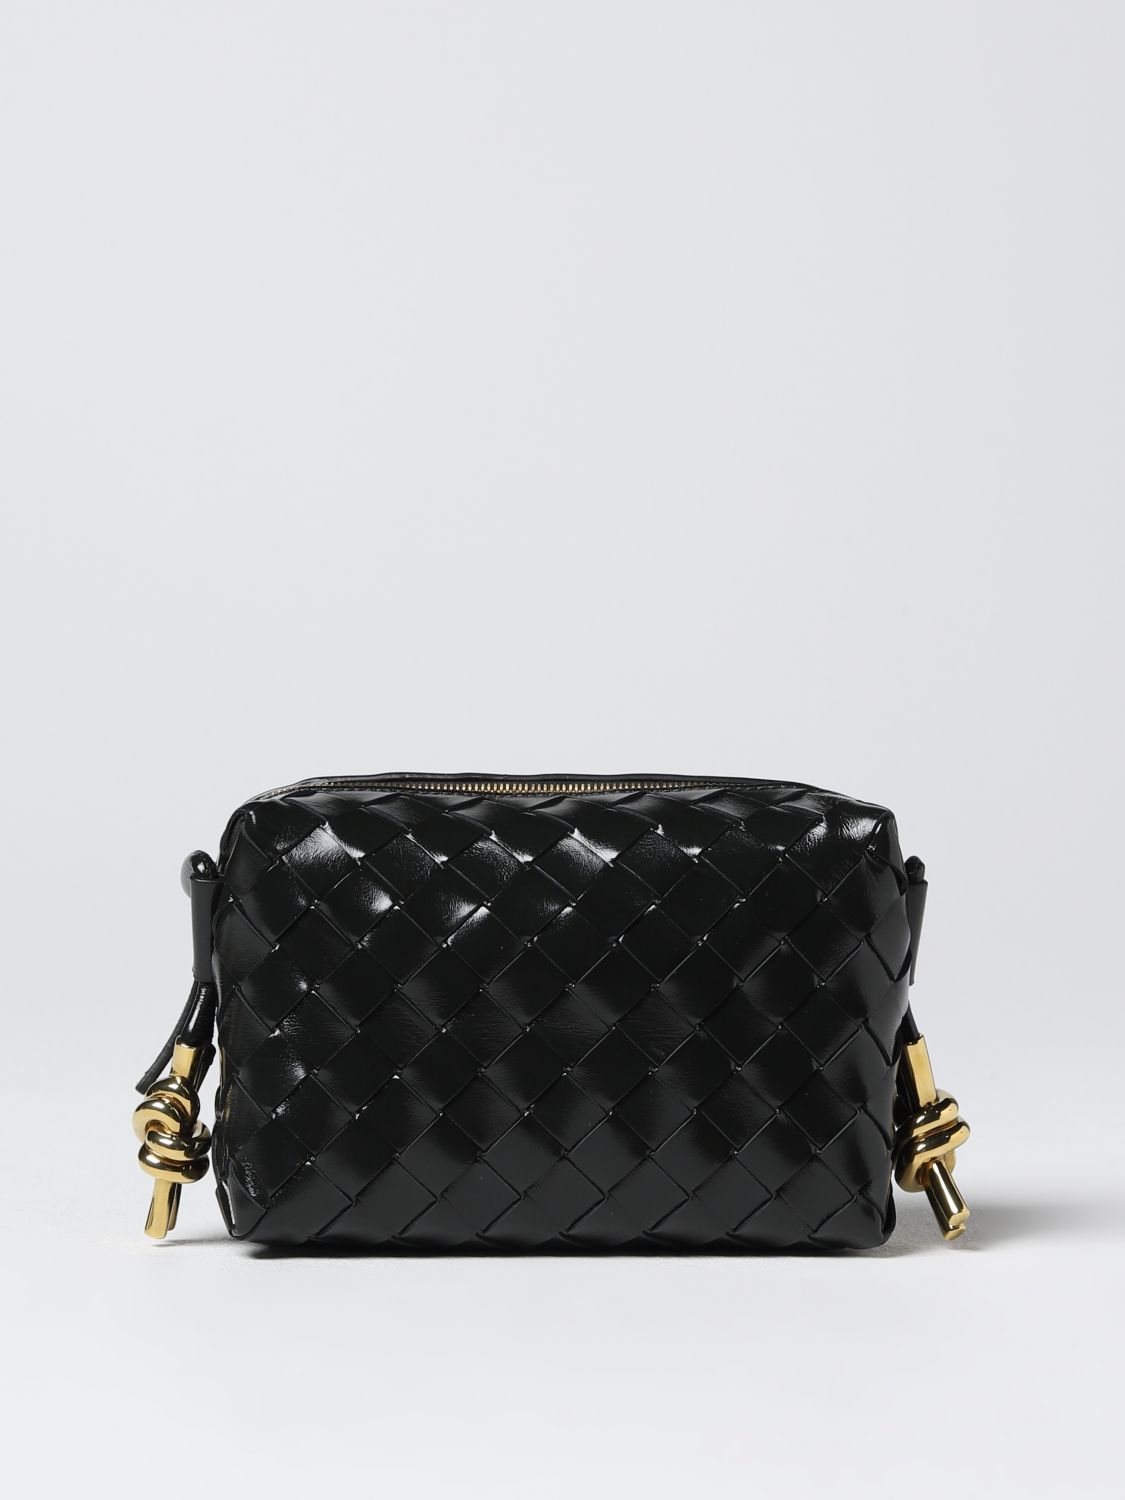 BOTTEGA VENETA: Loop bag in brushed leather - Black  Bottega Veneta crossbody  bags 736130V2GV1 online at